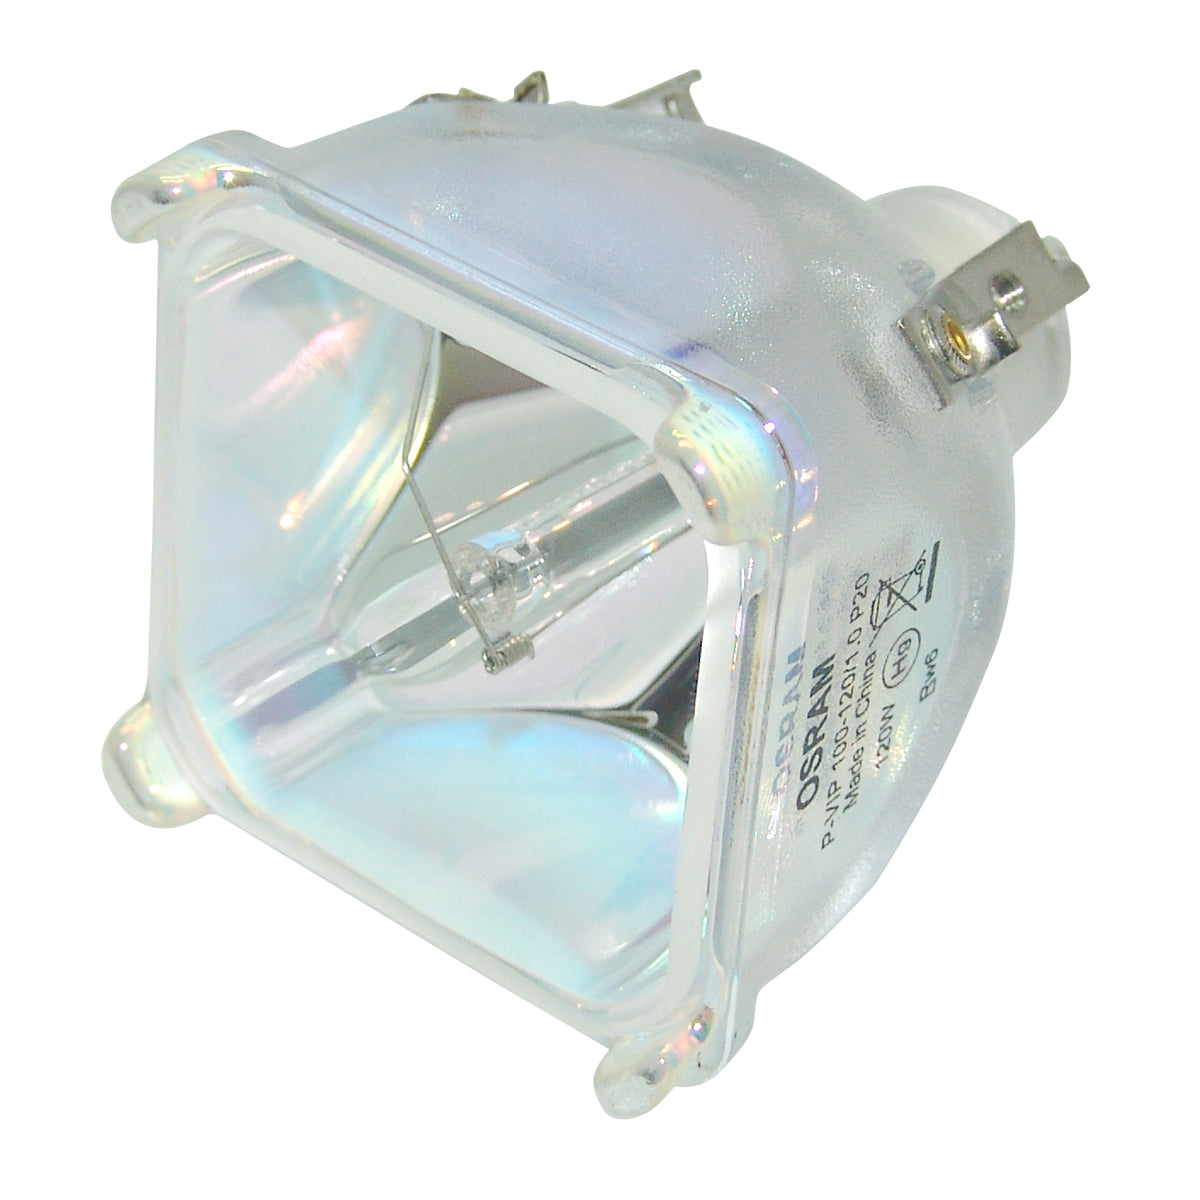 3M 78-6969-9599-8 Osram Projector Bare Lamp